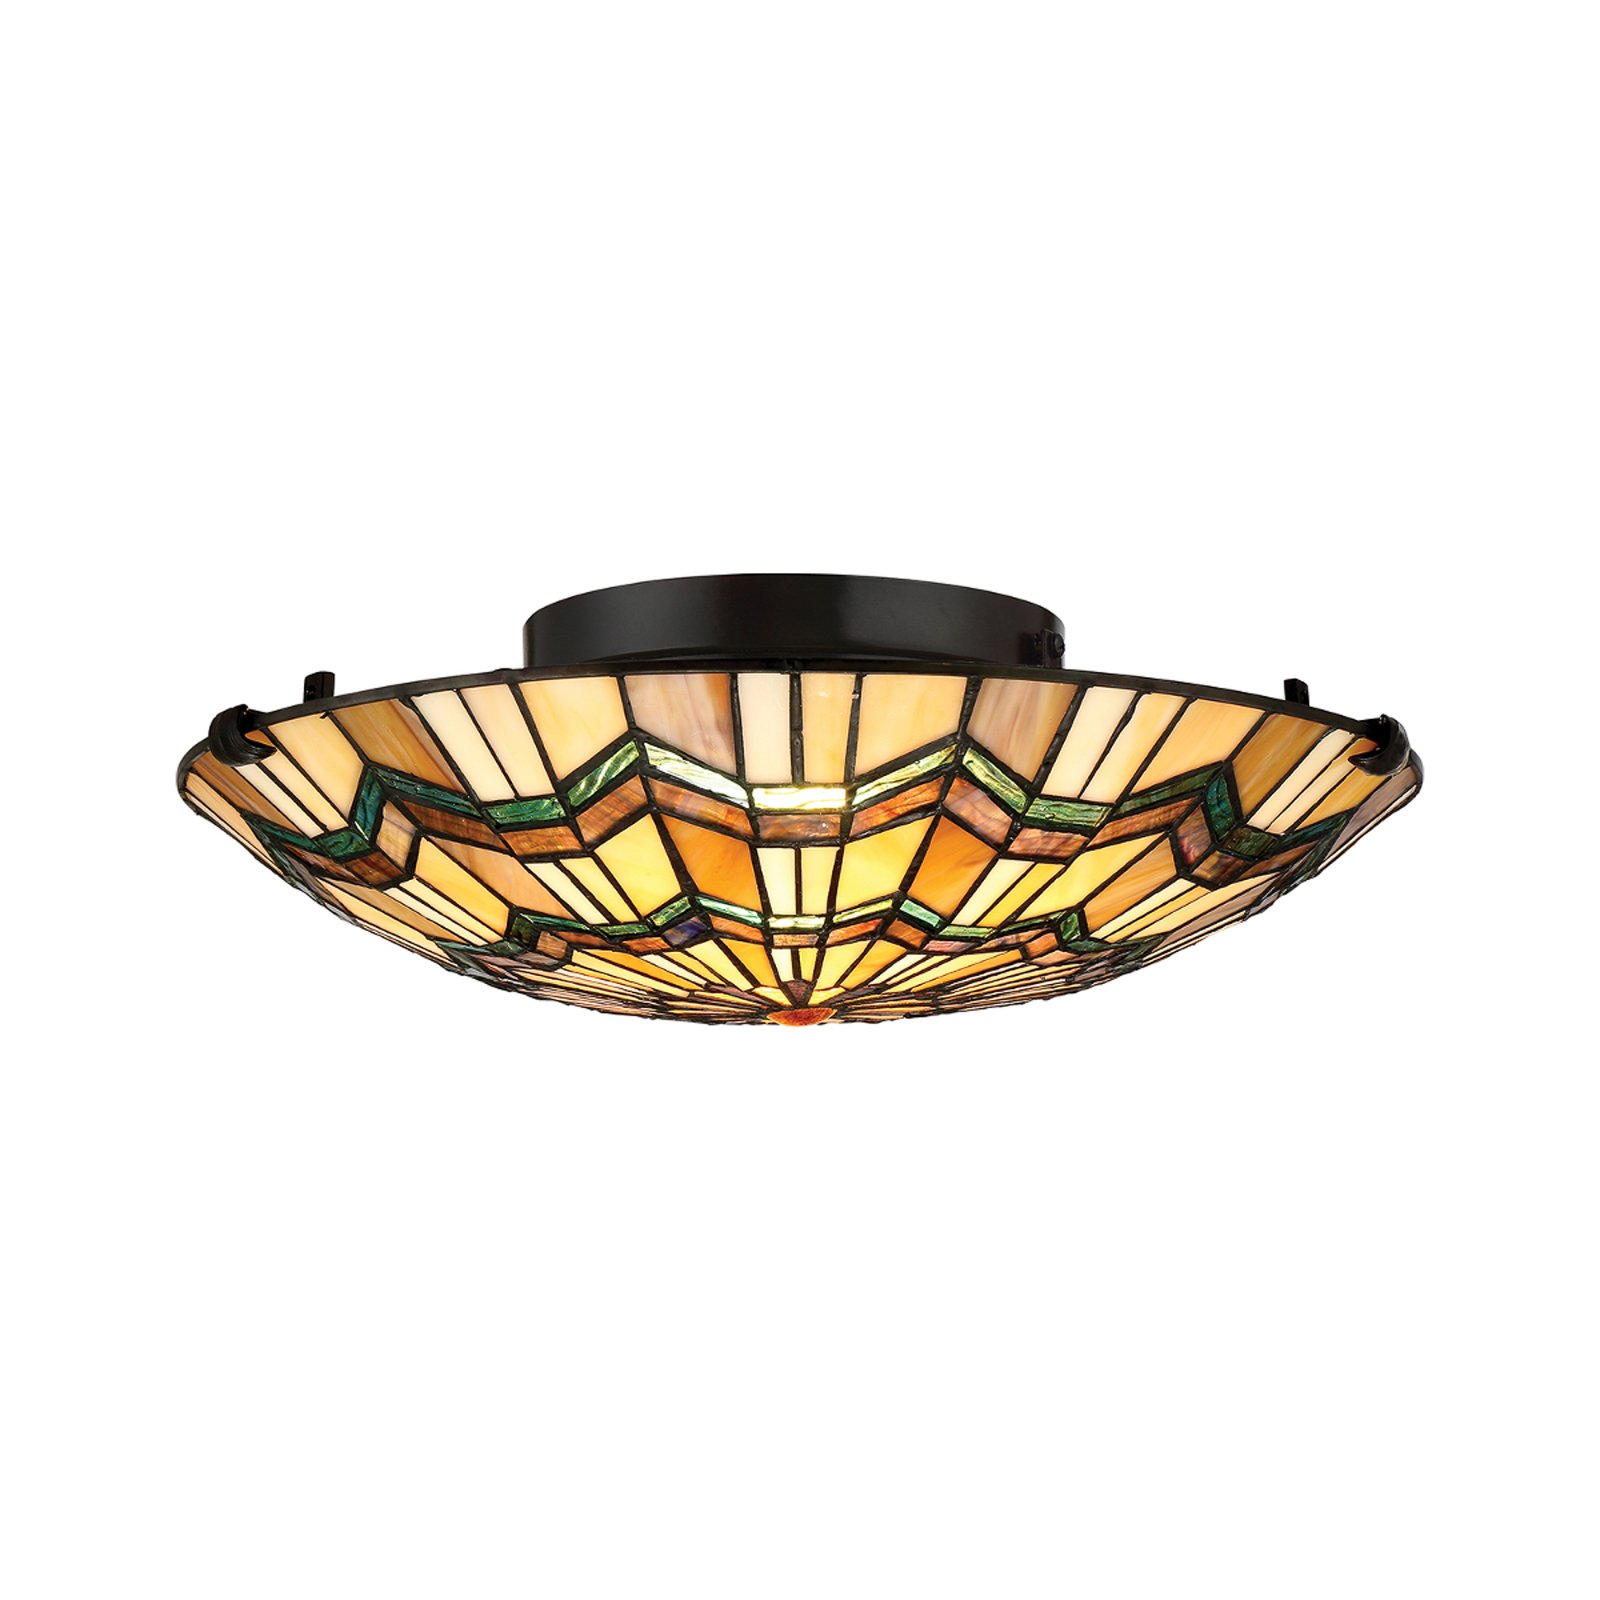 Deckenlampe Alcott im Tiffany-Design